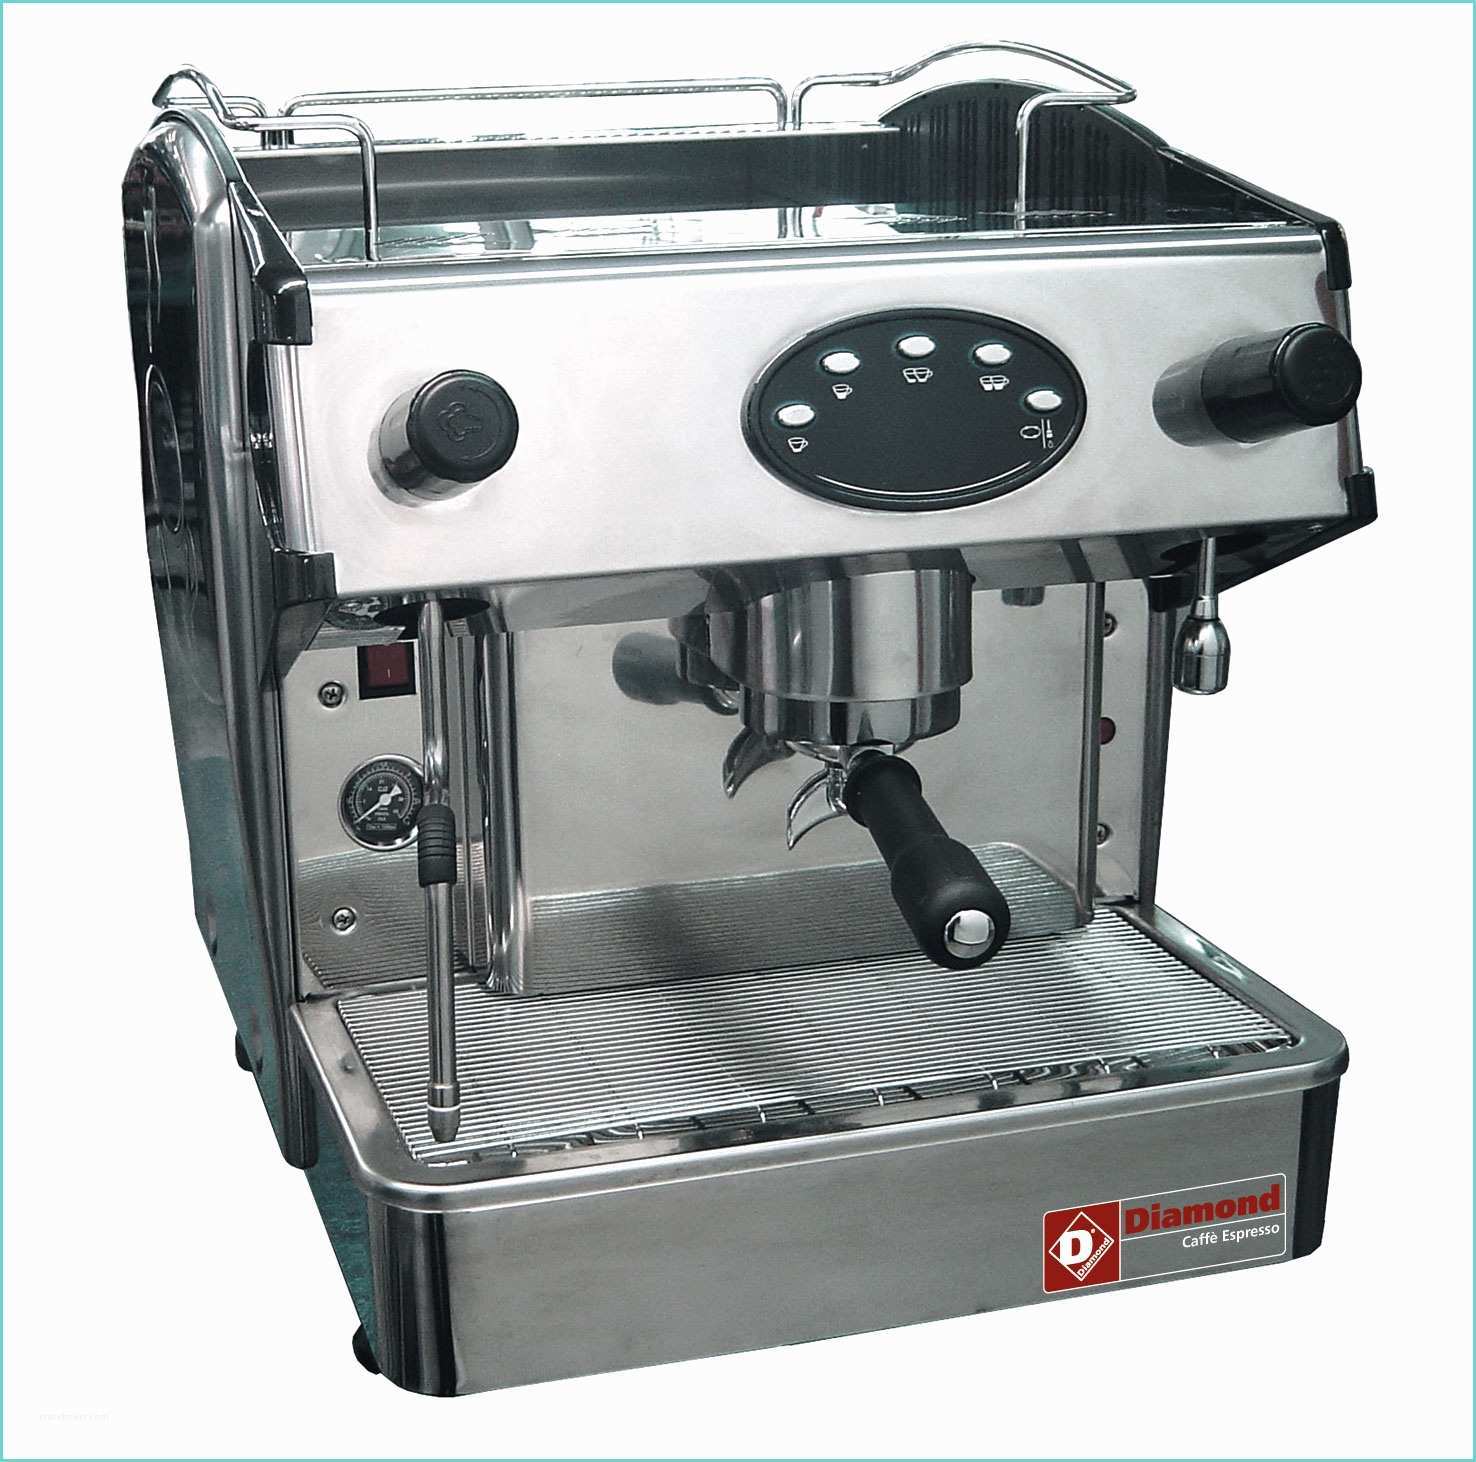 Machine A Cafe Jura Pas Cher Machine A Cafe Pression 15 Bars Systeme Manuel Eau Chaude